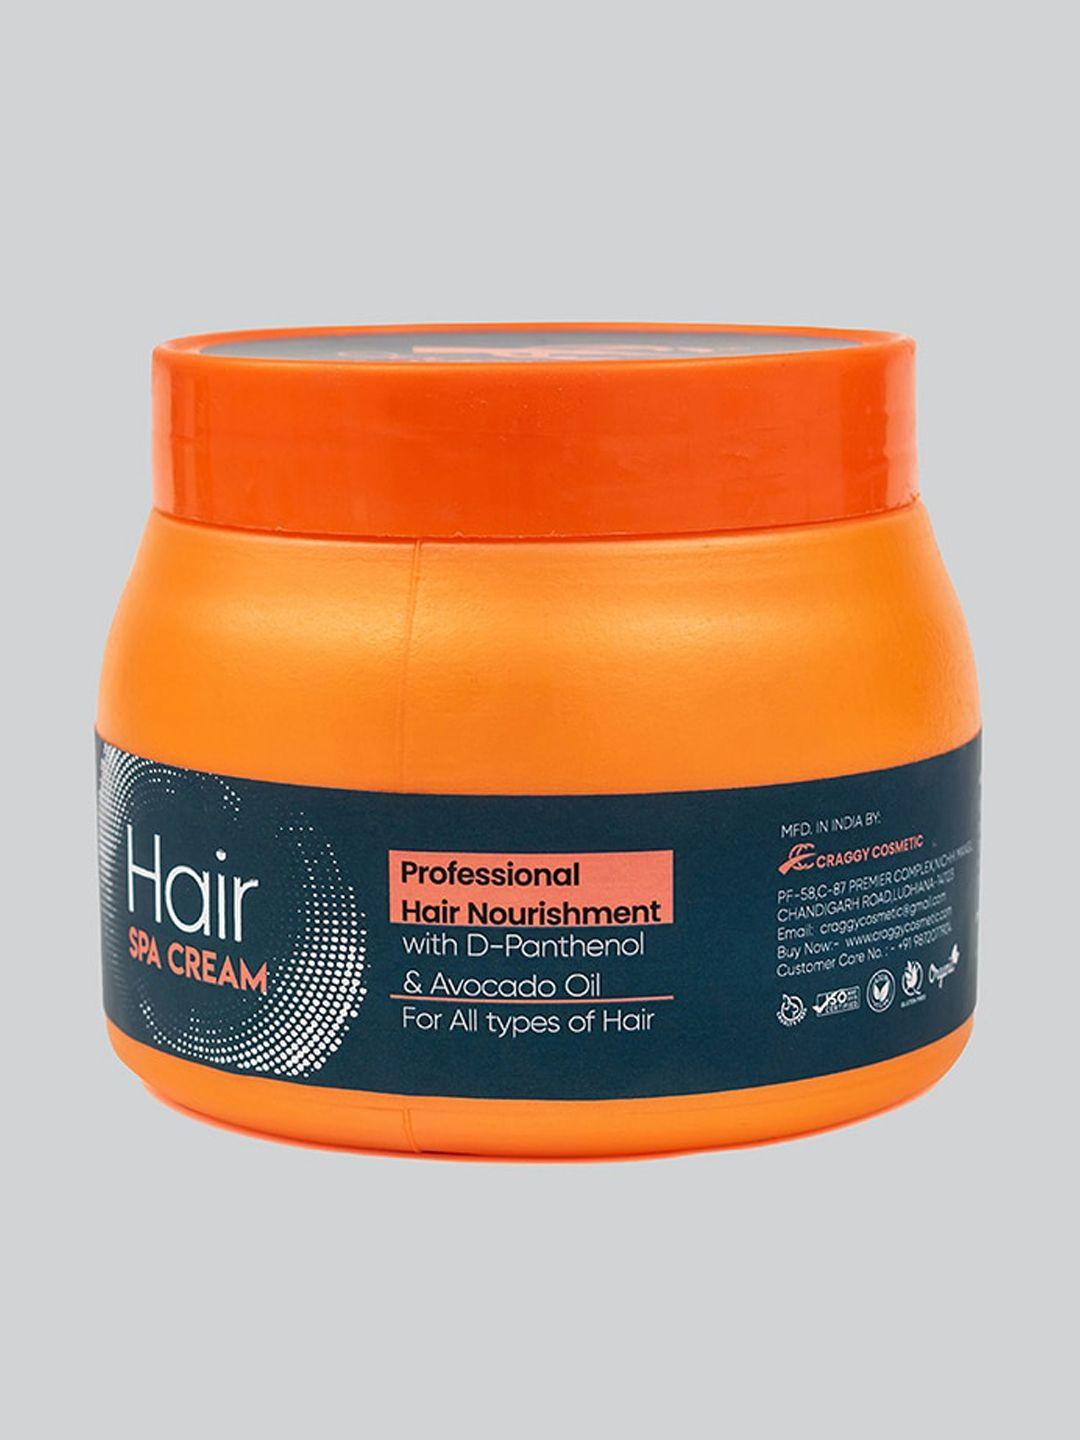 craggy cosmetic professional hair nourishment spa cream with avocado oil - 500 g